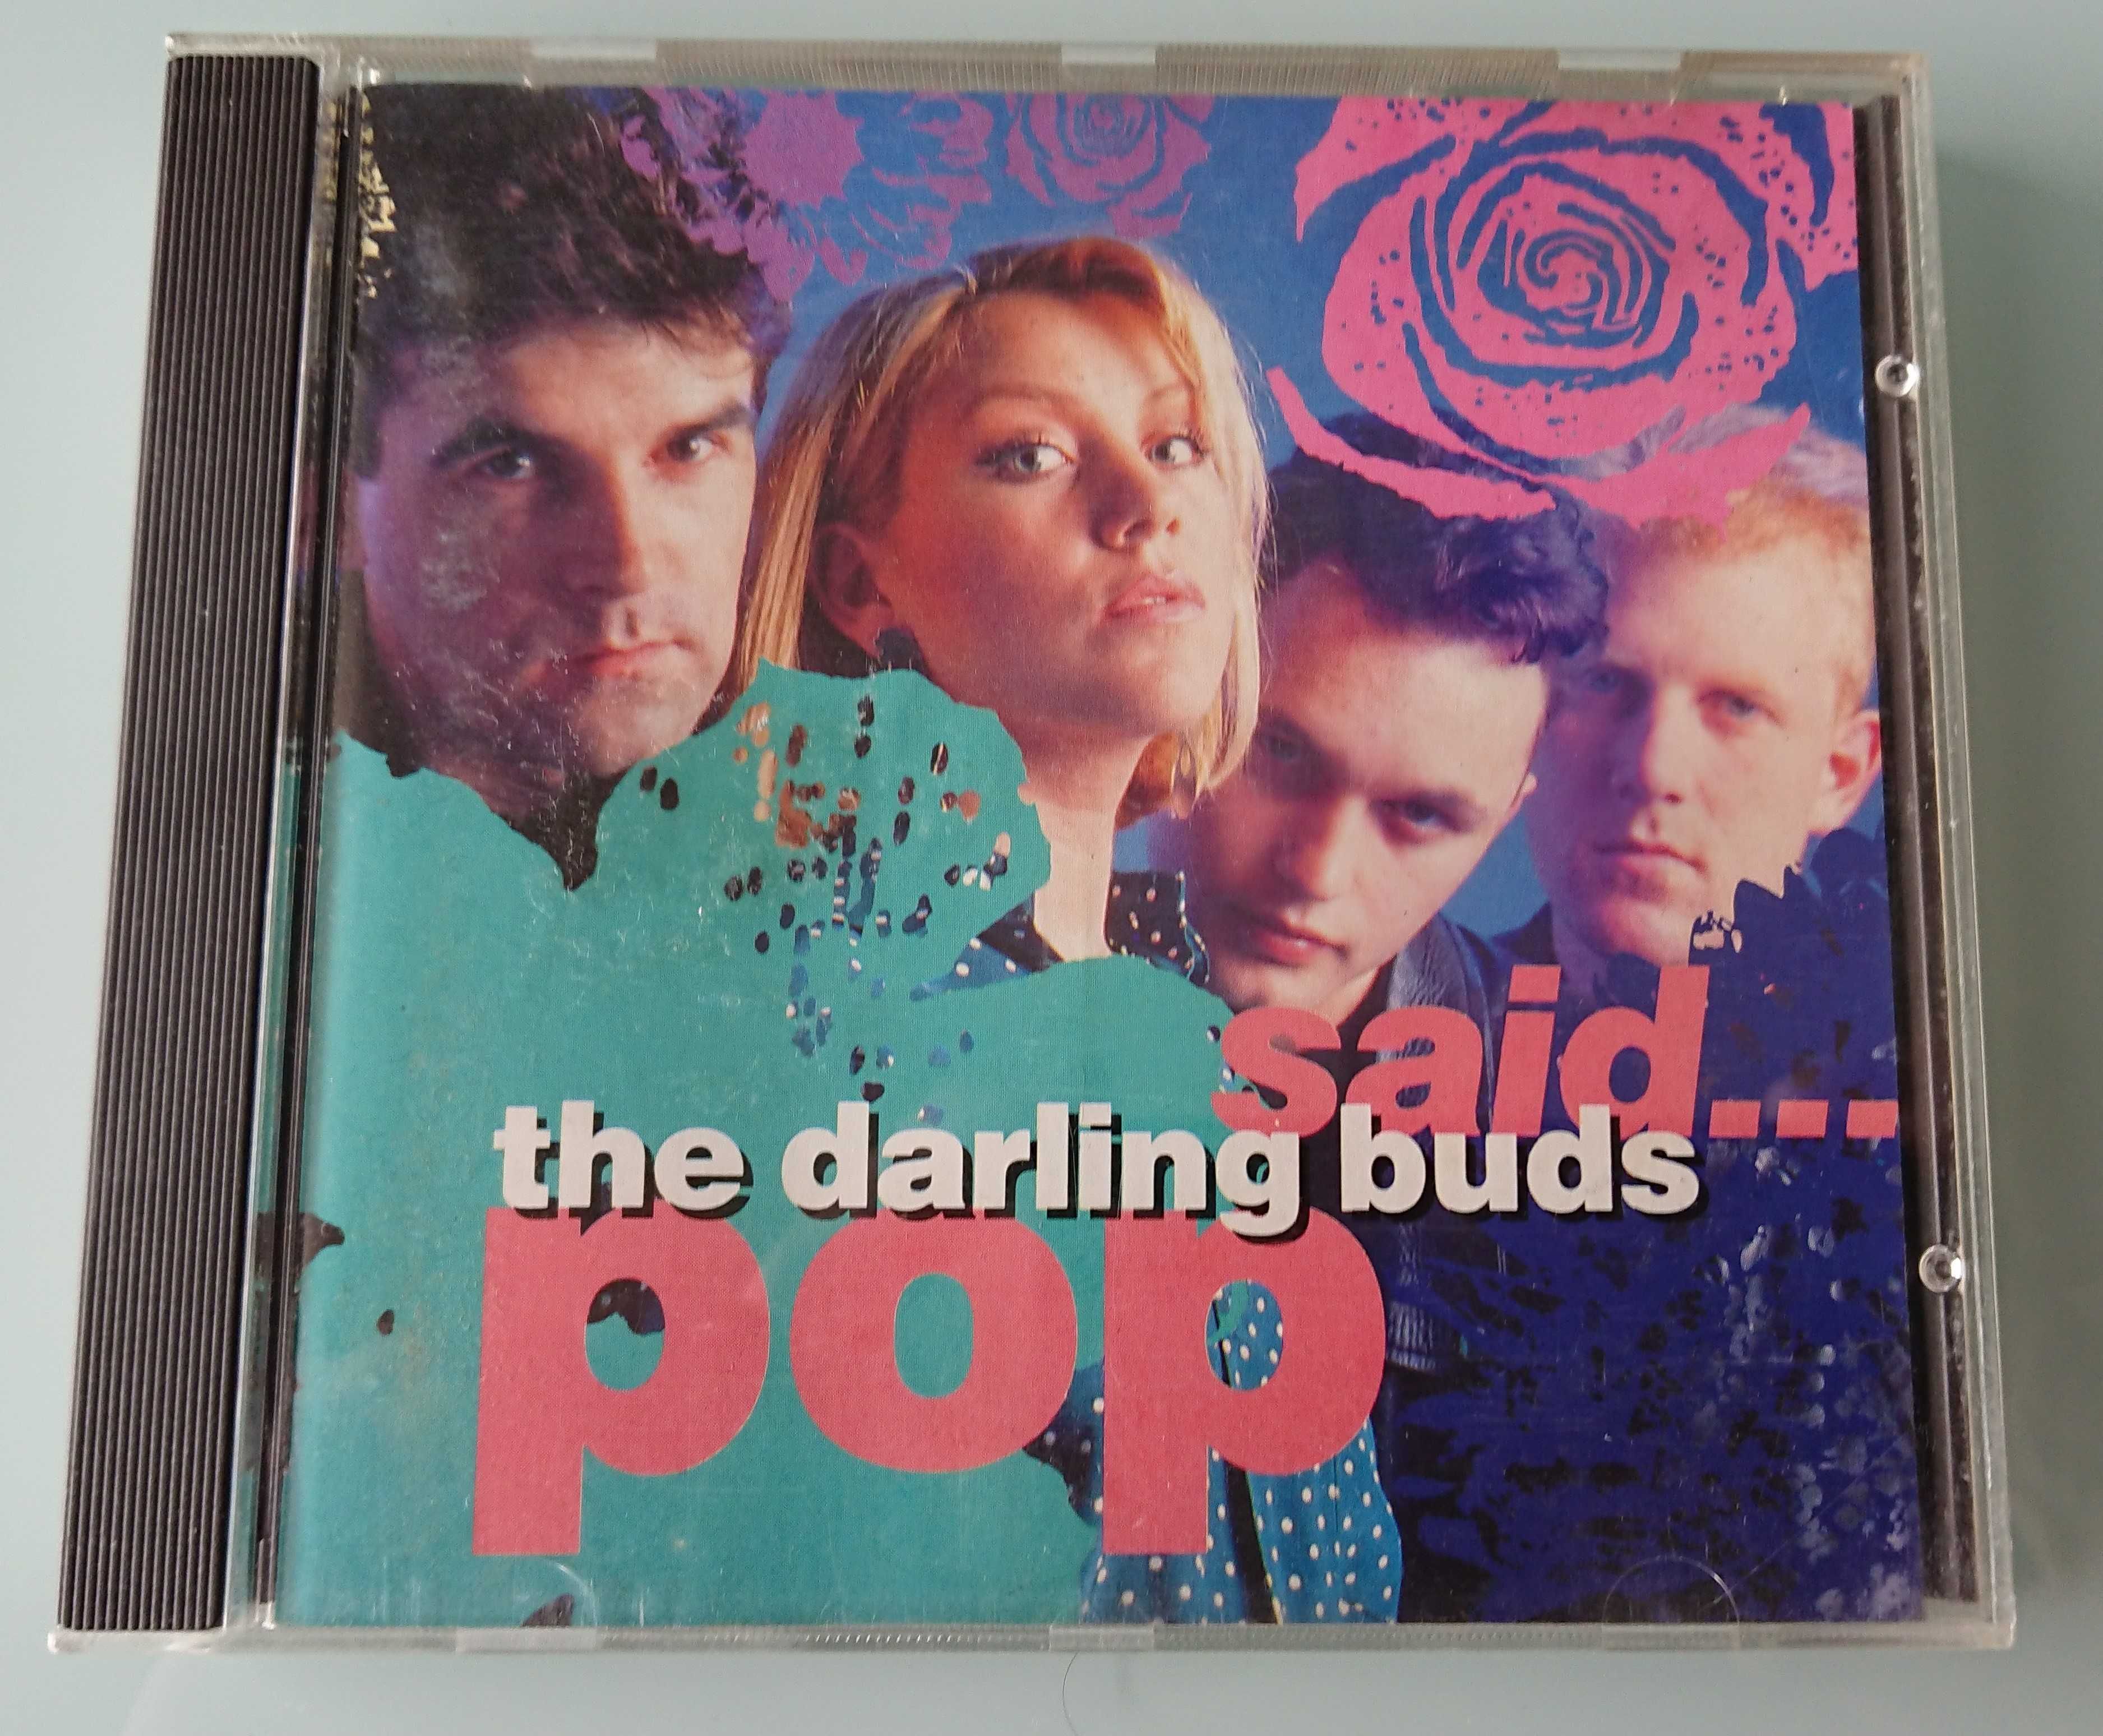 The Darling Buds, Dubstar, Echobelly, Hushpuppies, LCD Soundsystem